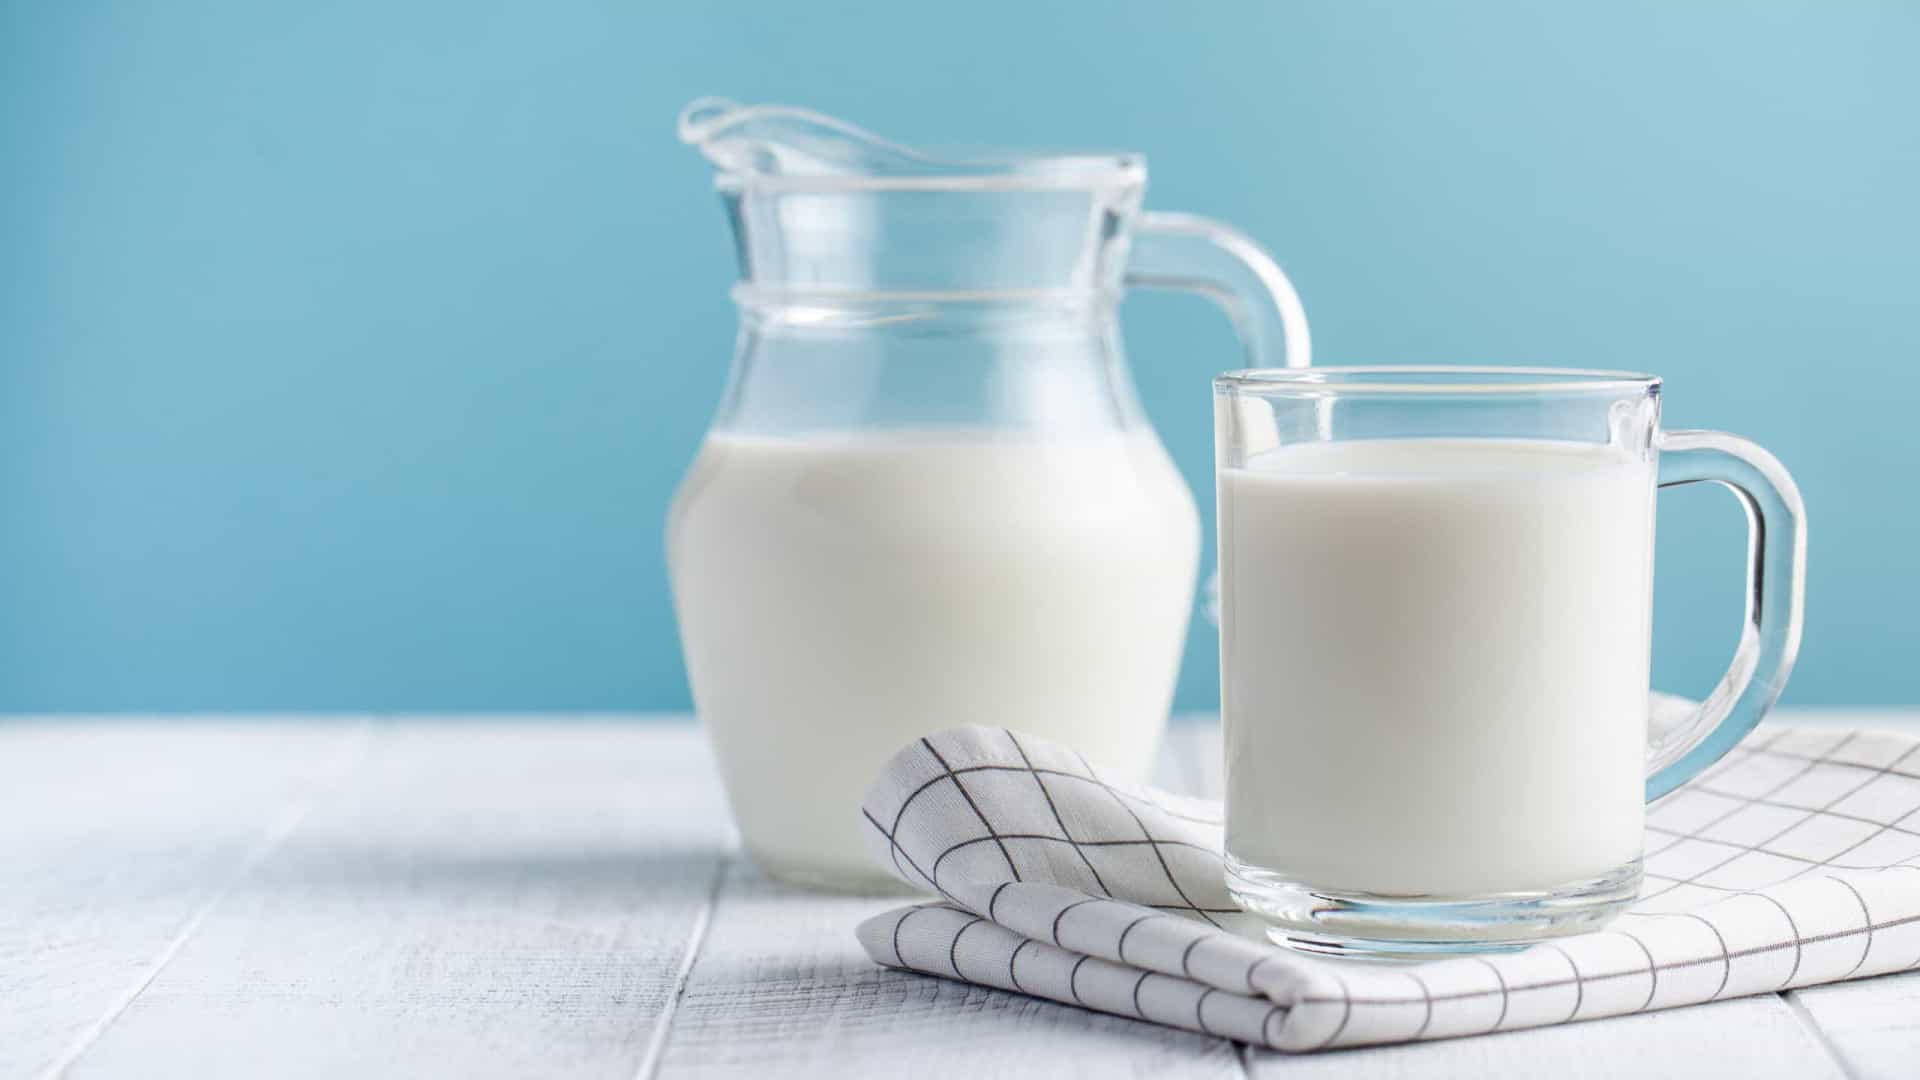 Diferença entre soro de leite, leite e bebida láctea pode confundir consumidor